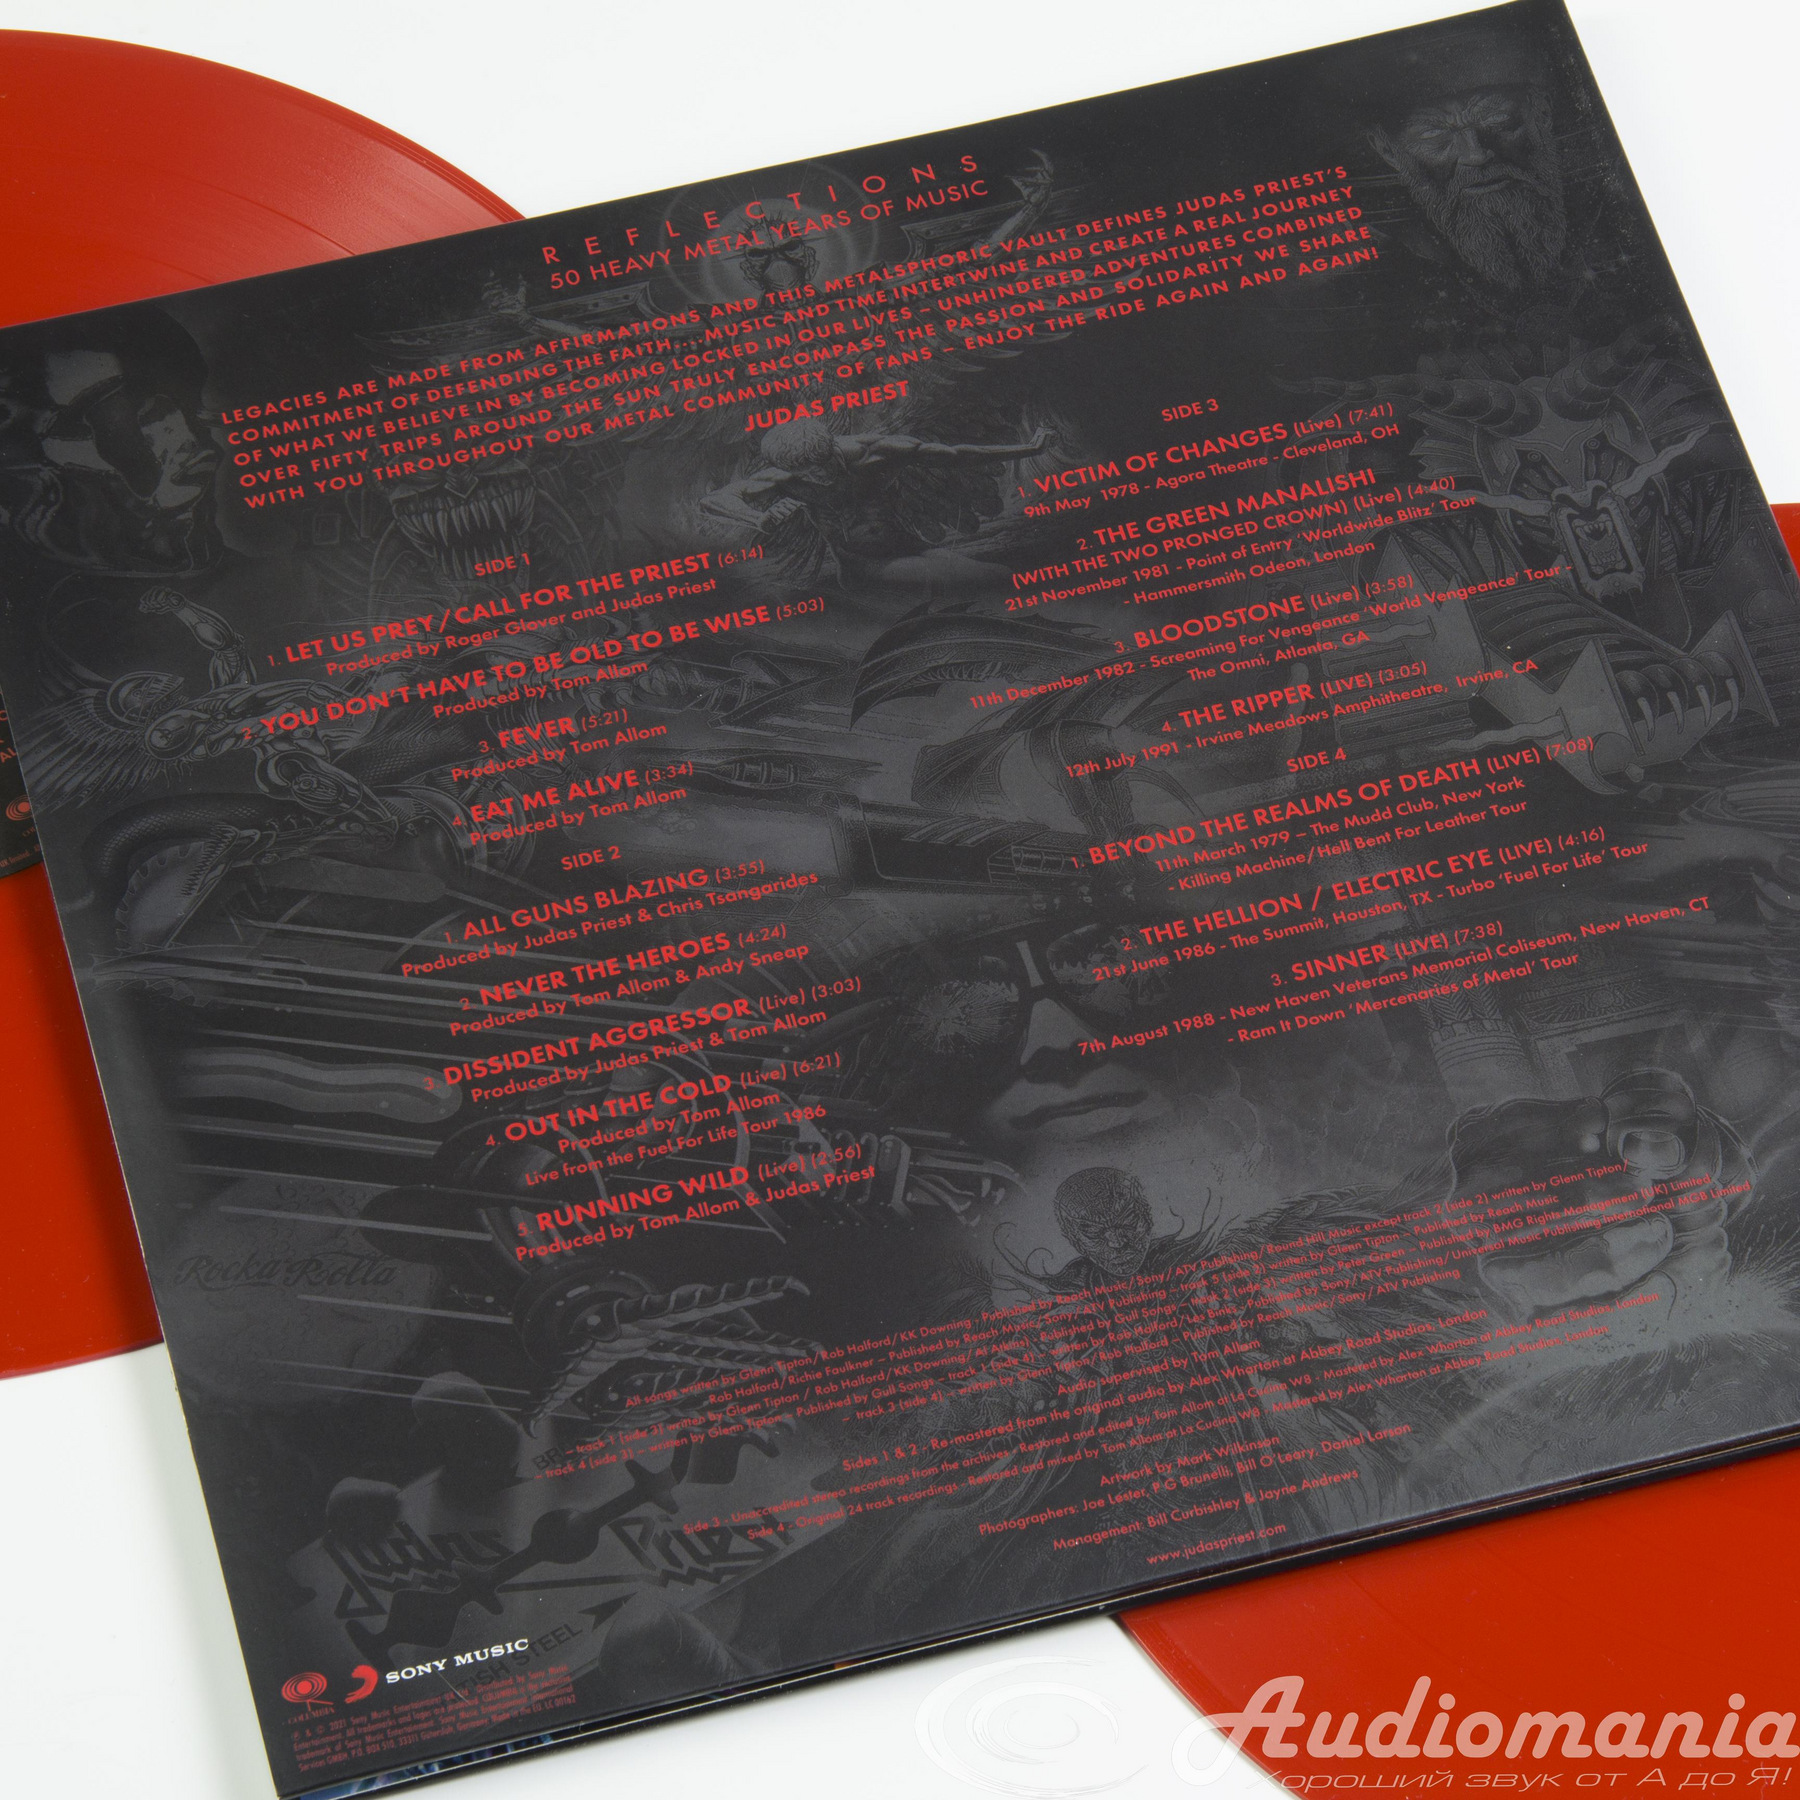 Judas Priest – Reflections: 50 Heavy Metal Years of Music